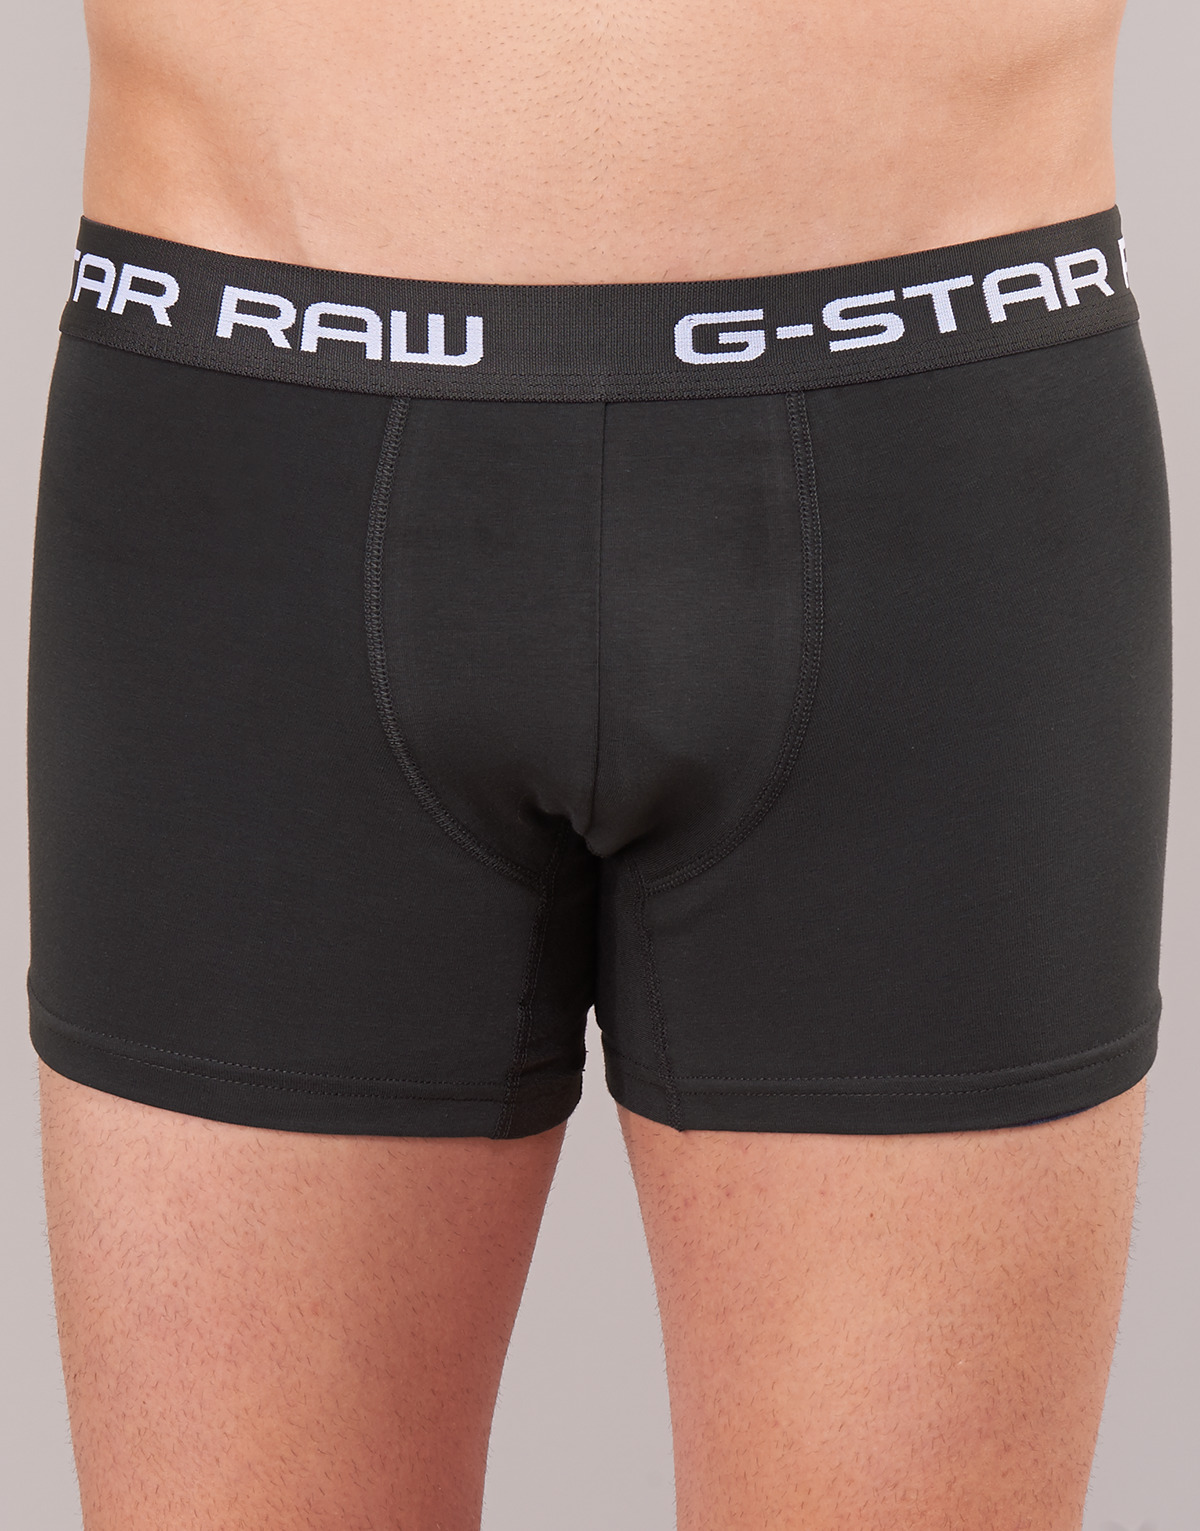 G-Star Raw Noir / Vert CLASSIC TRUNK CLR 3 PACK zdOm7K9w